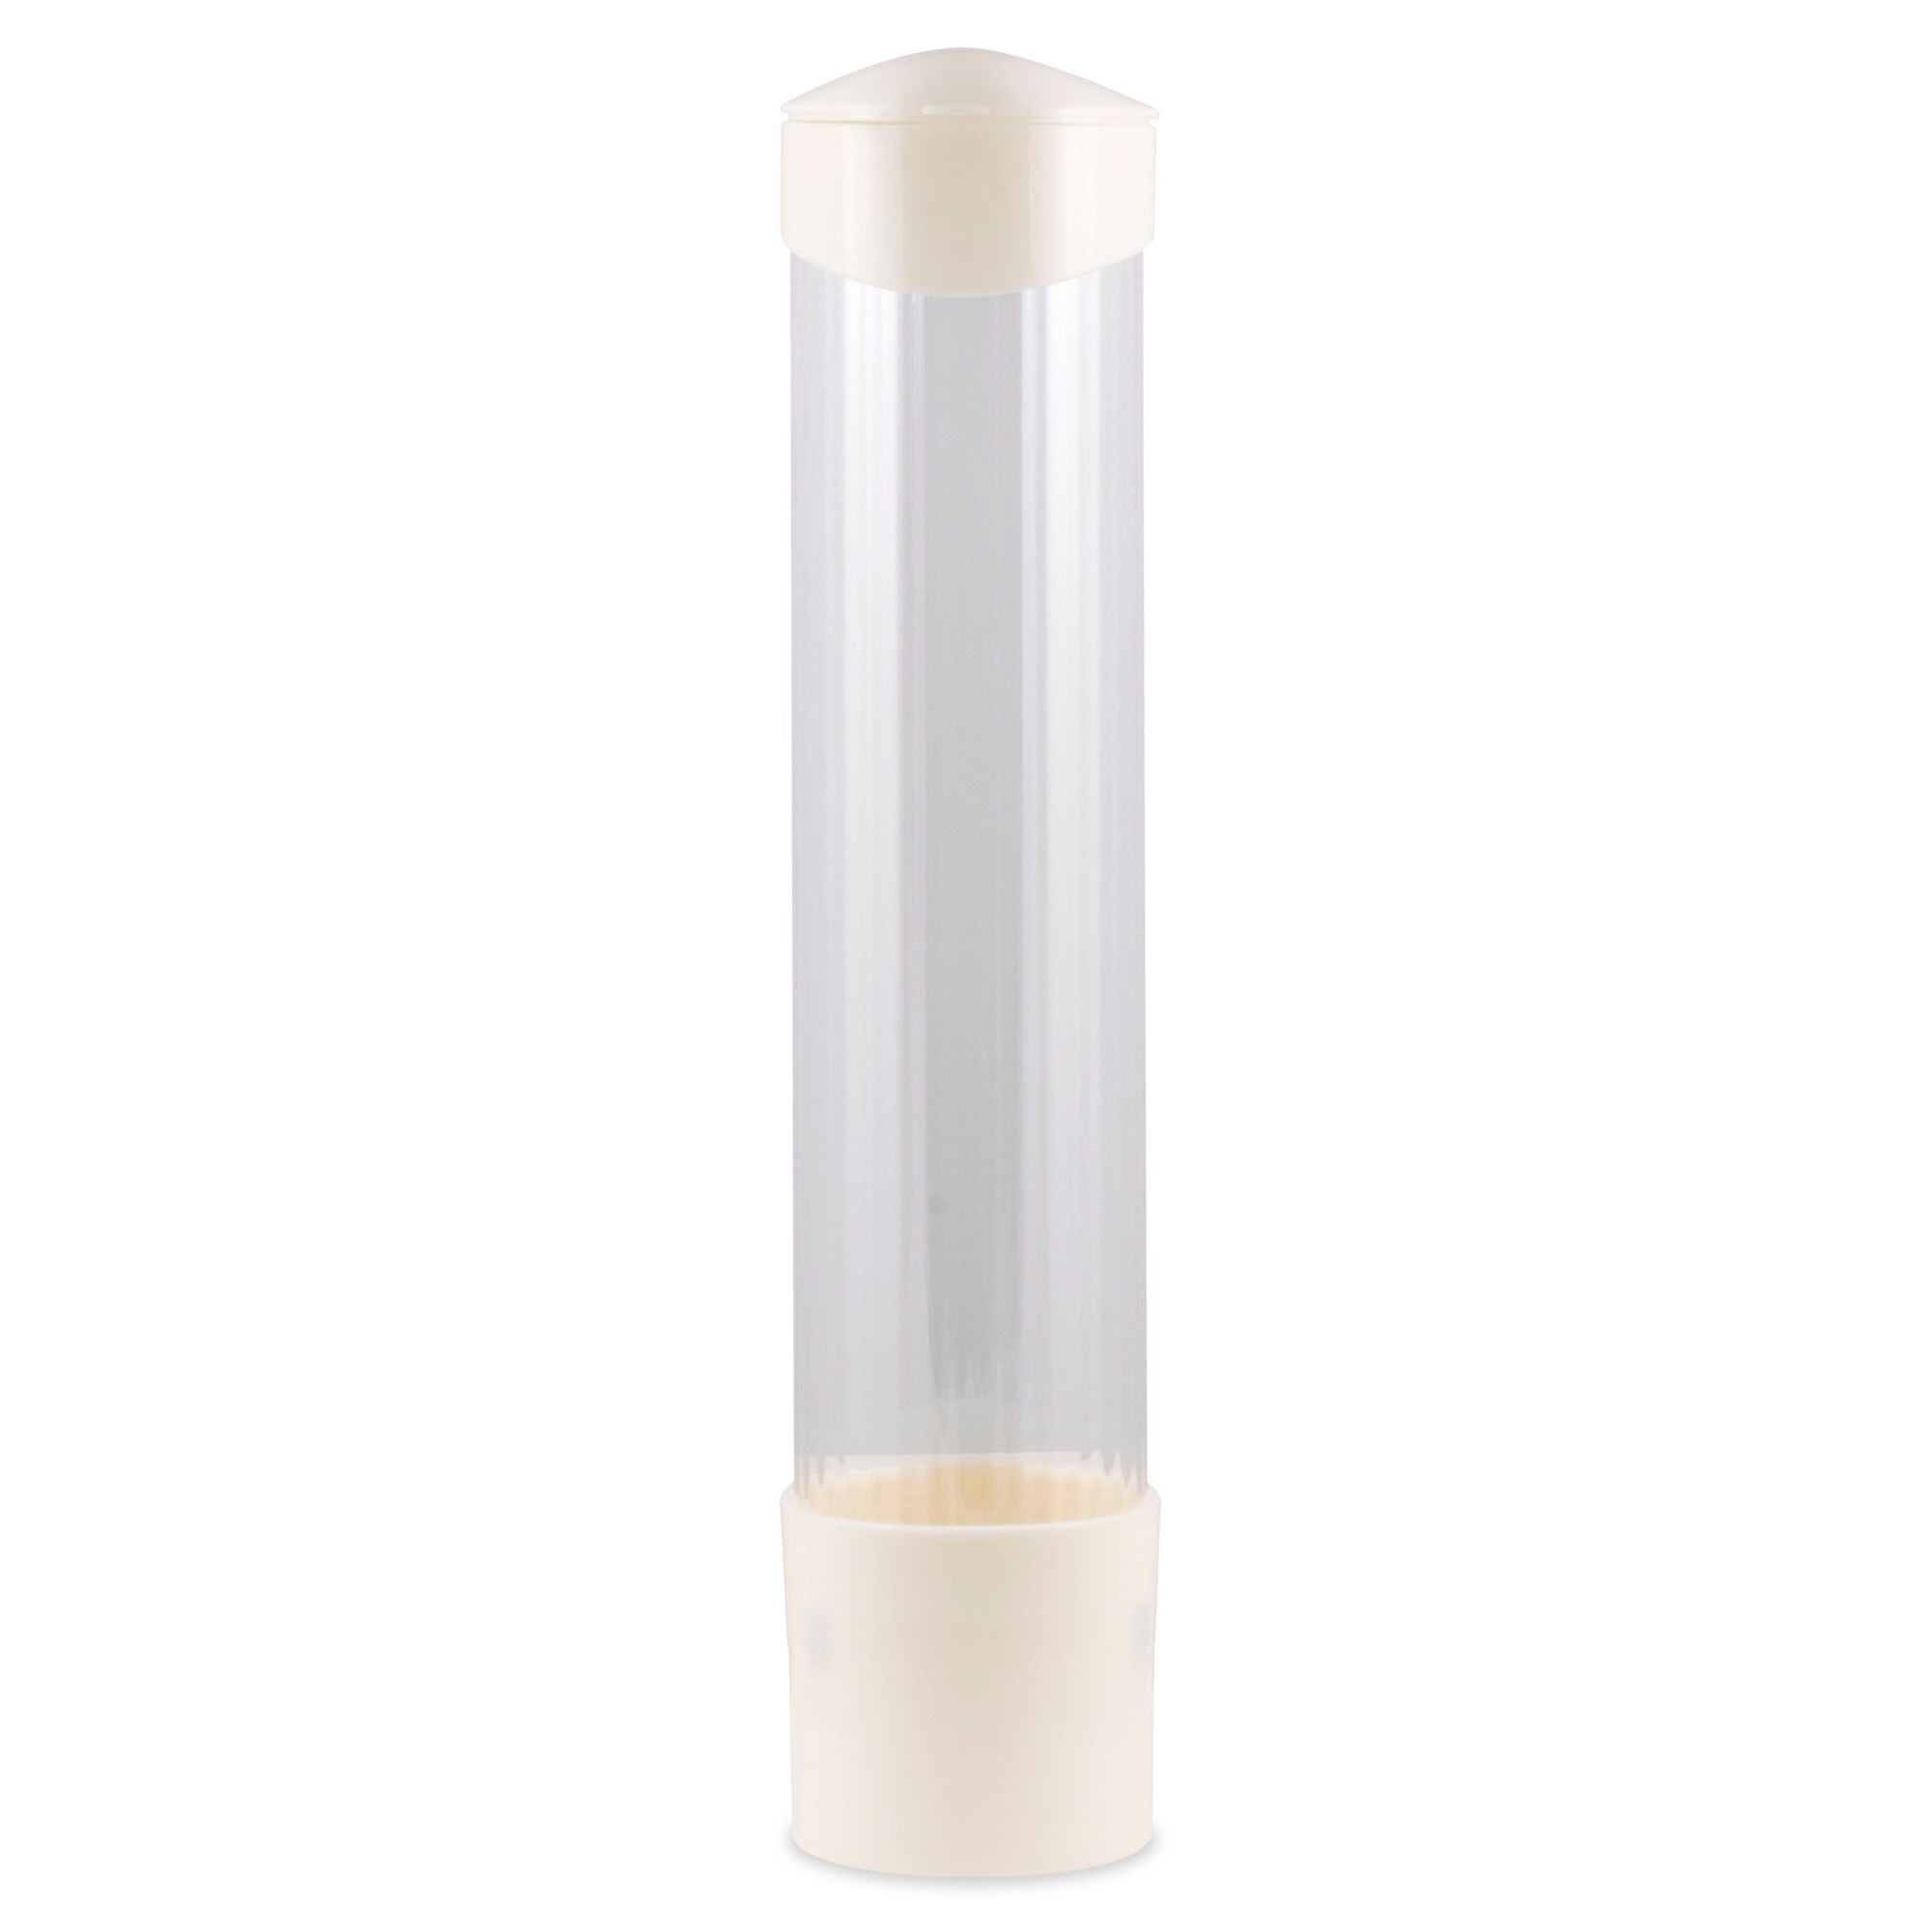 Suport de pahare din plastic sau carton pentru dozator de apa, Zass ZWDCH 01, ABS + policarbonat, 40 x 7.5 x 8 cm, alb + transparent